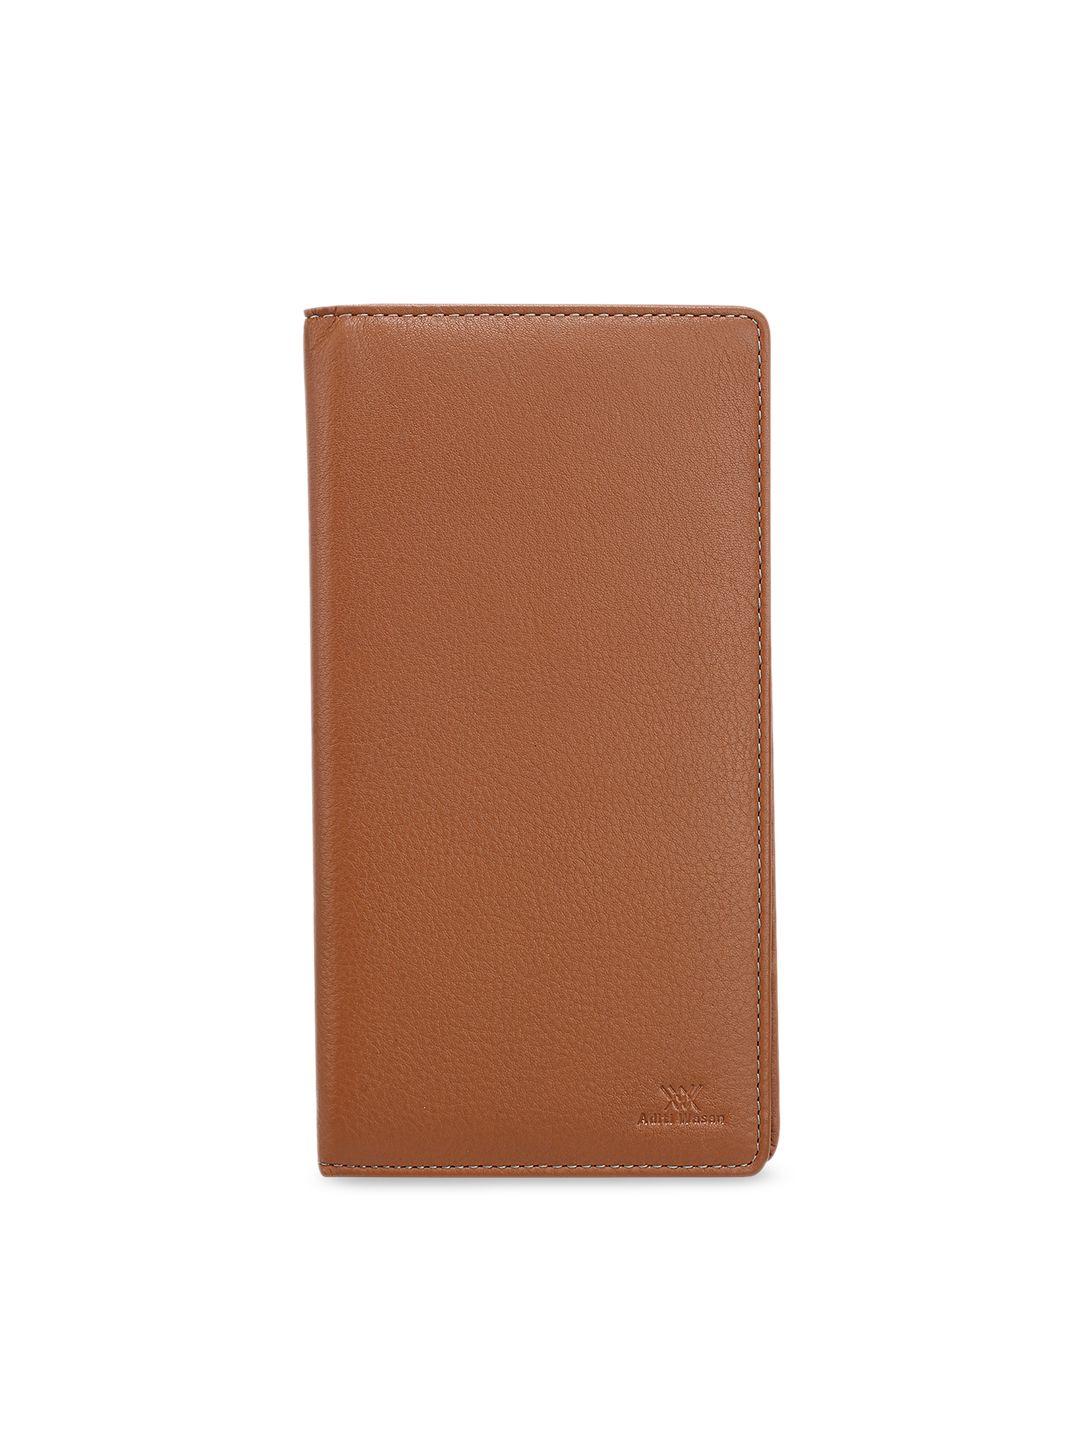 aditi wasan unisex brown leather solid passport holder